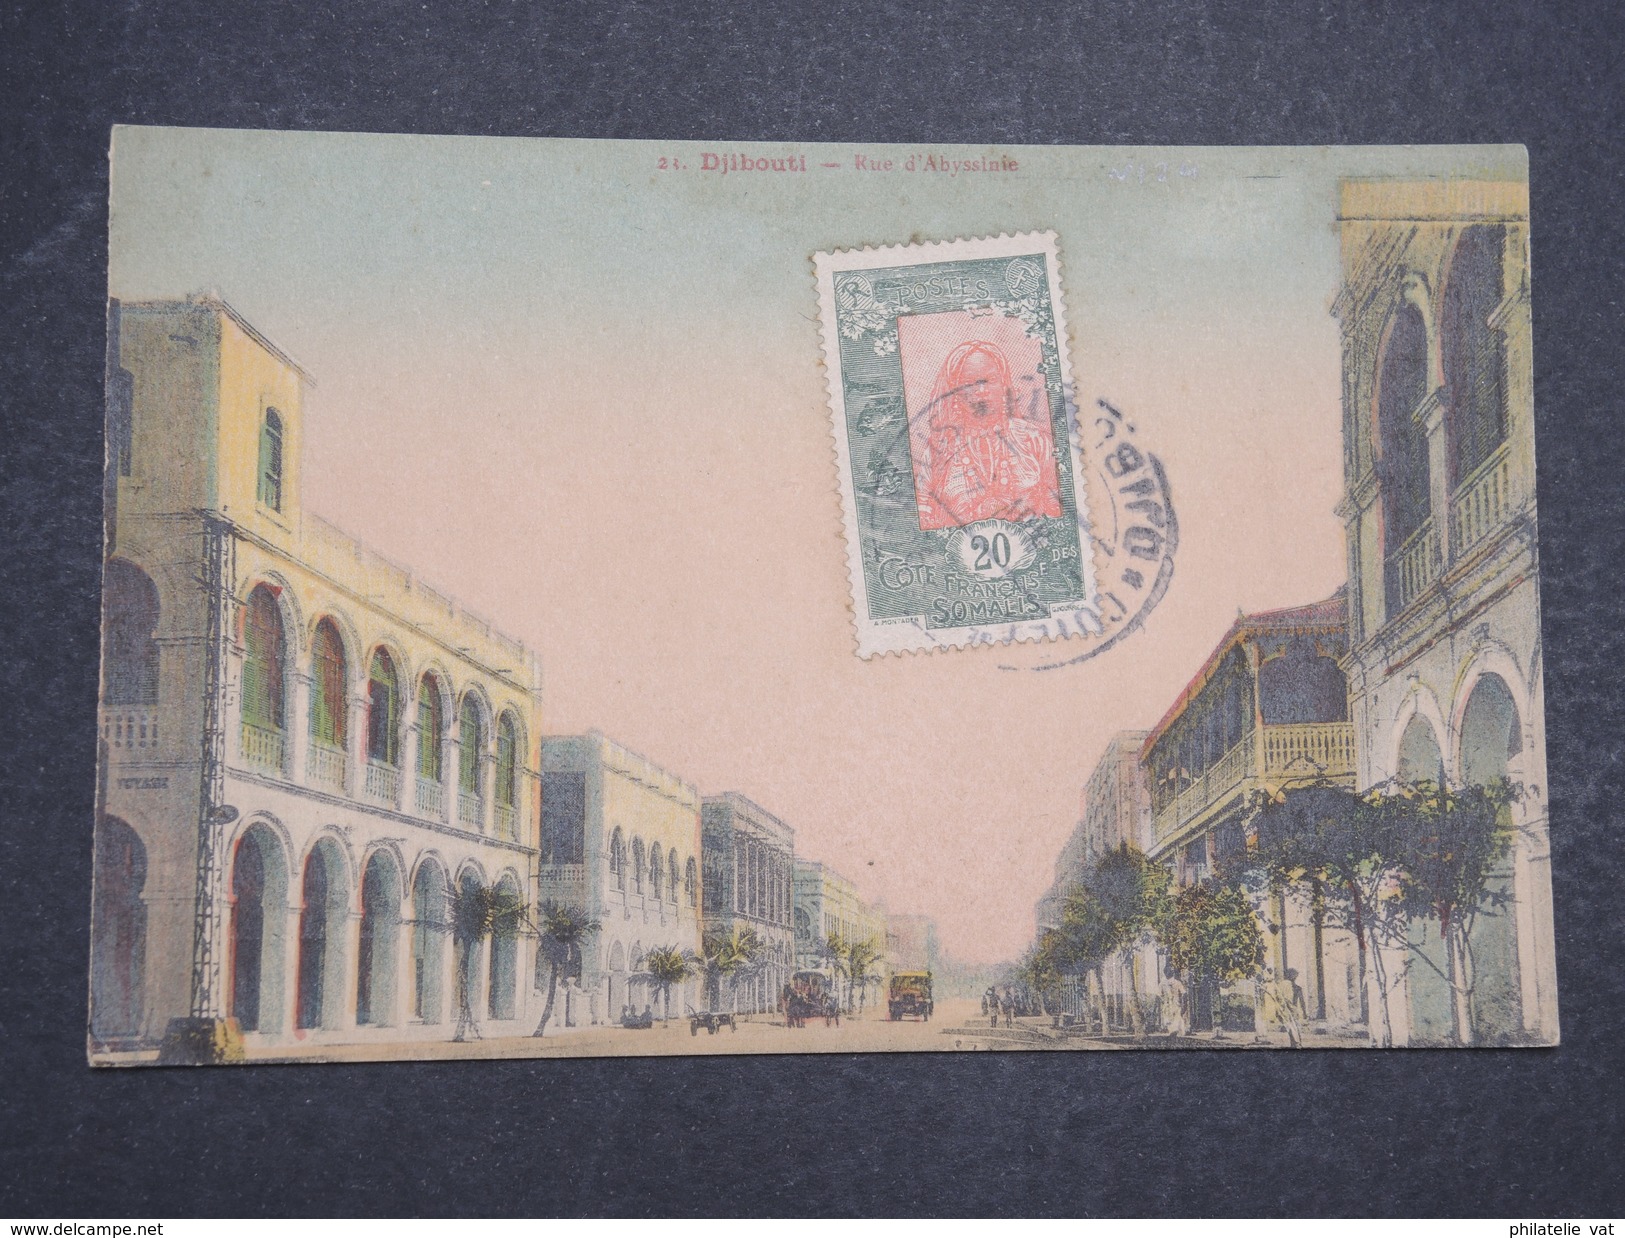 COTE FRANçAISE DES SOMALIS - Carte Postale Djibouti Pour Paris -Nov 1934 - P22098 - Cartas & Documentos